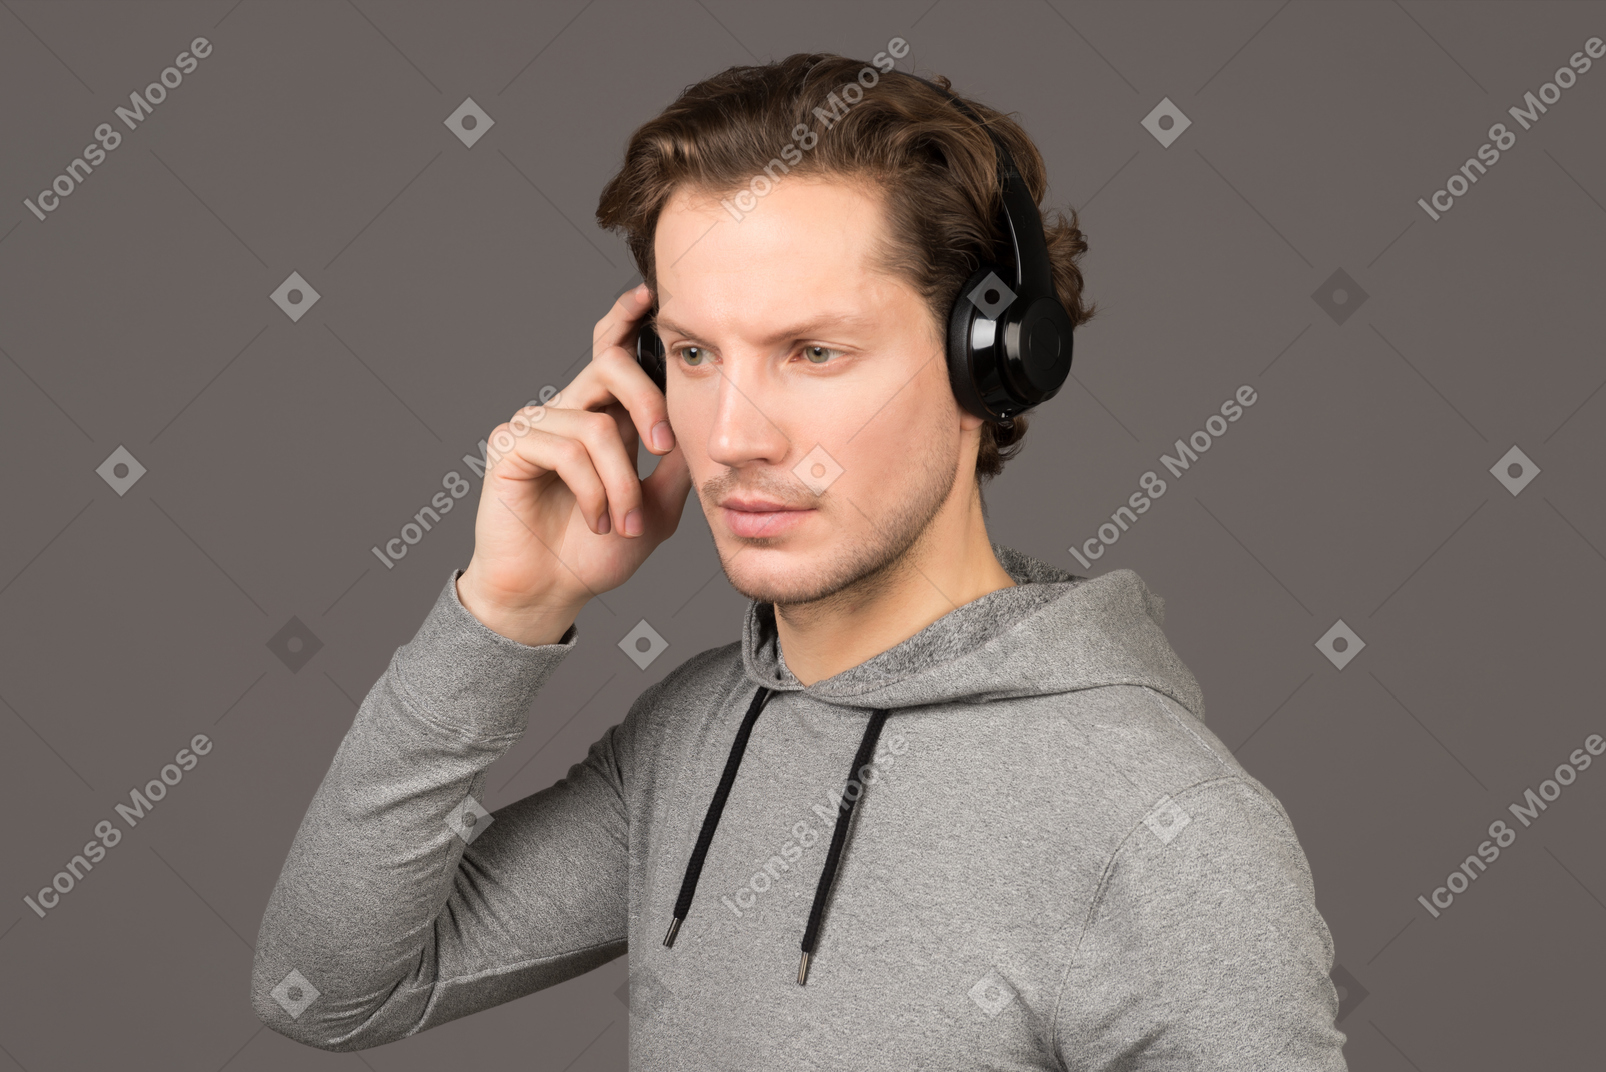 Enjoying music in headphones